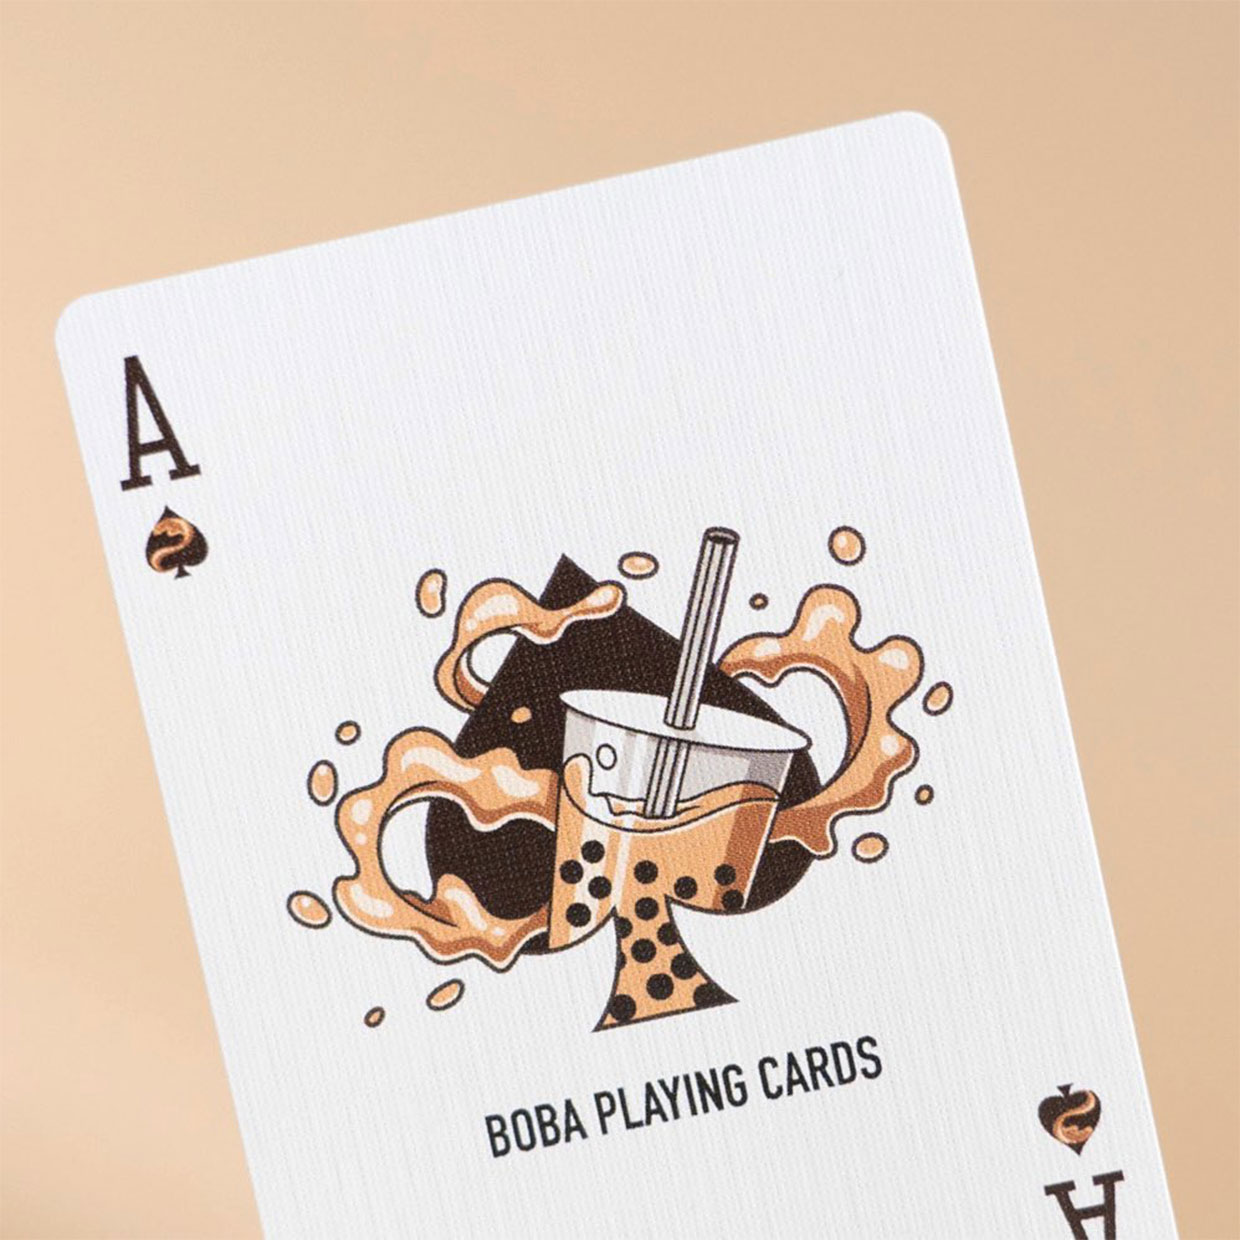 Boba Playing Cards